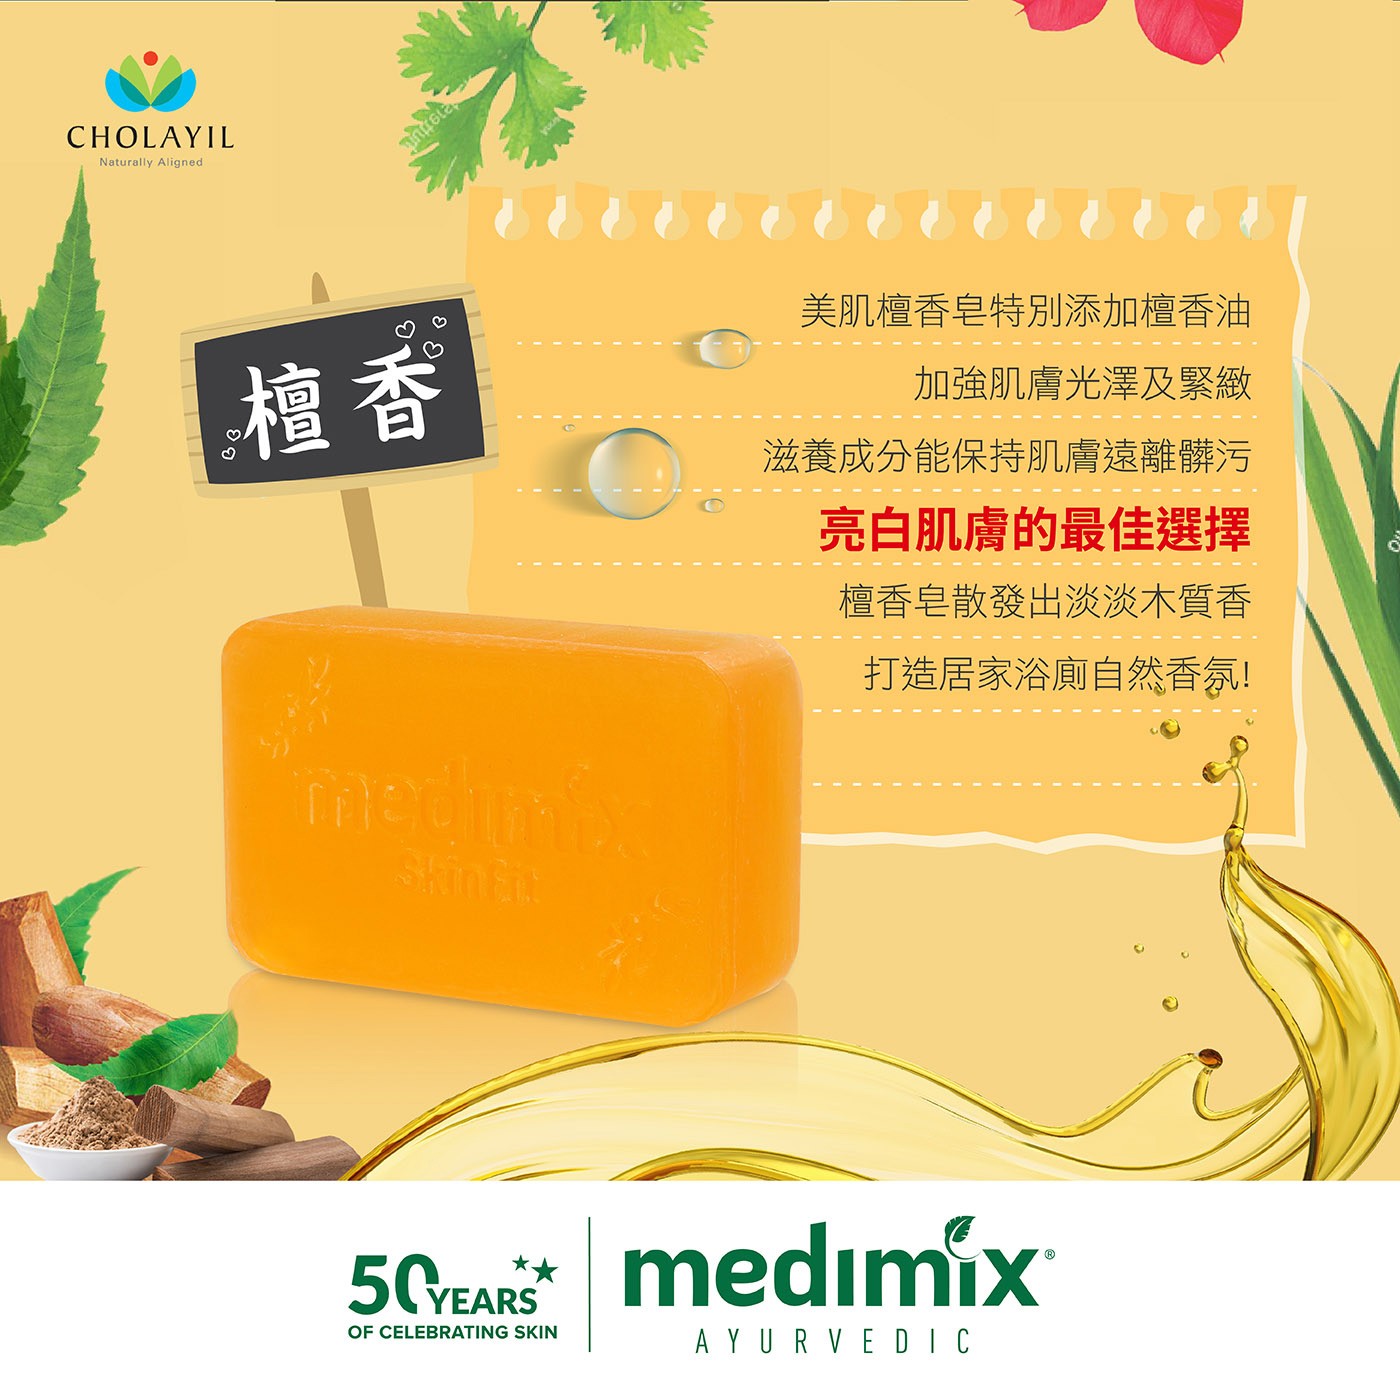 Medimix 印度綠寶石皇室藥草浴美肌皂 200公克 X 64入檀香添加檀香油加強肌膚光澤緊緻滋養成分保持肌膚遠離髒汙亮白肌膚最佳選擇